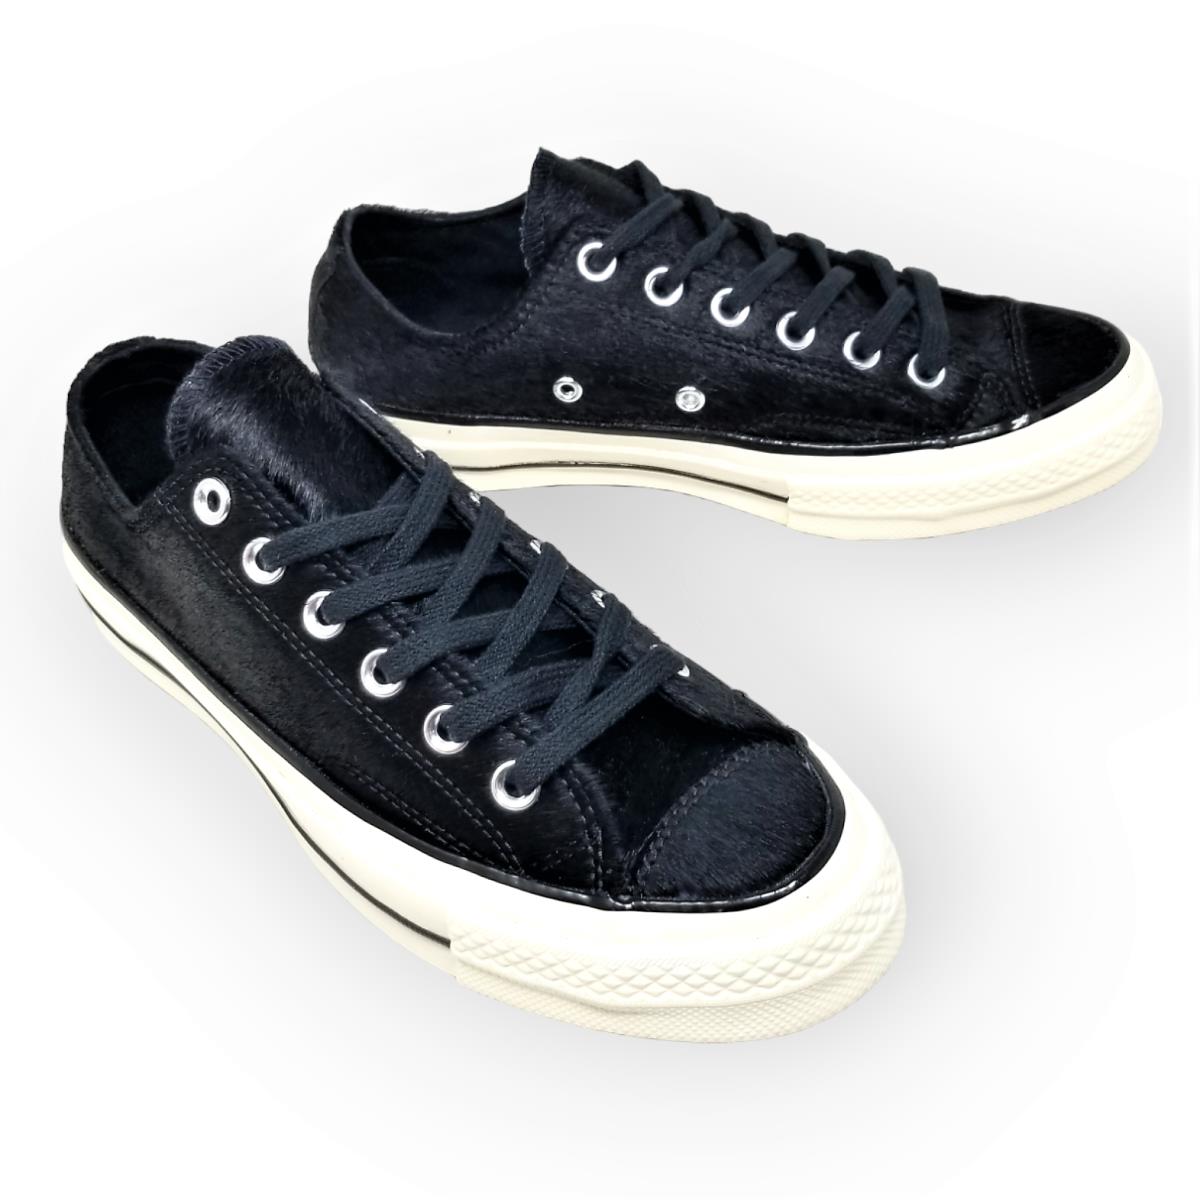 Converse Chuck Taylor 70 OX Pony Hair Sneaker - Black/black/egret - 157656C